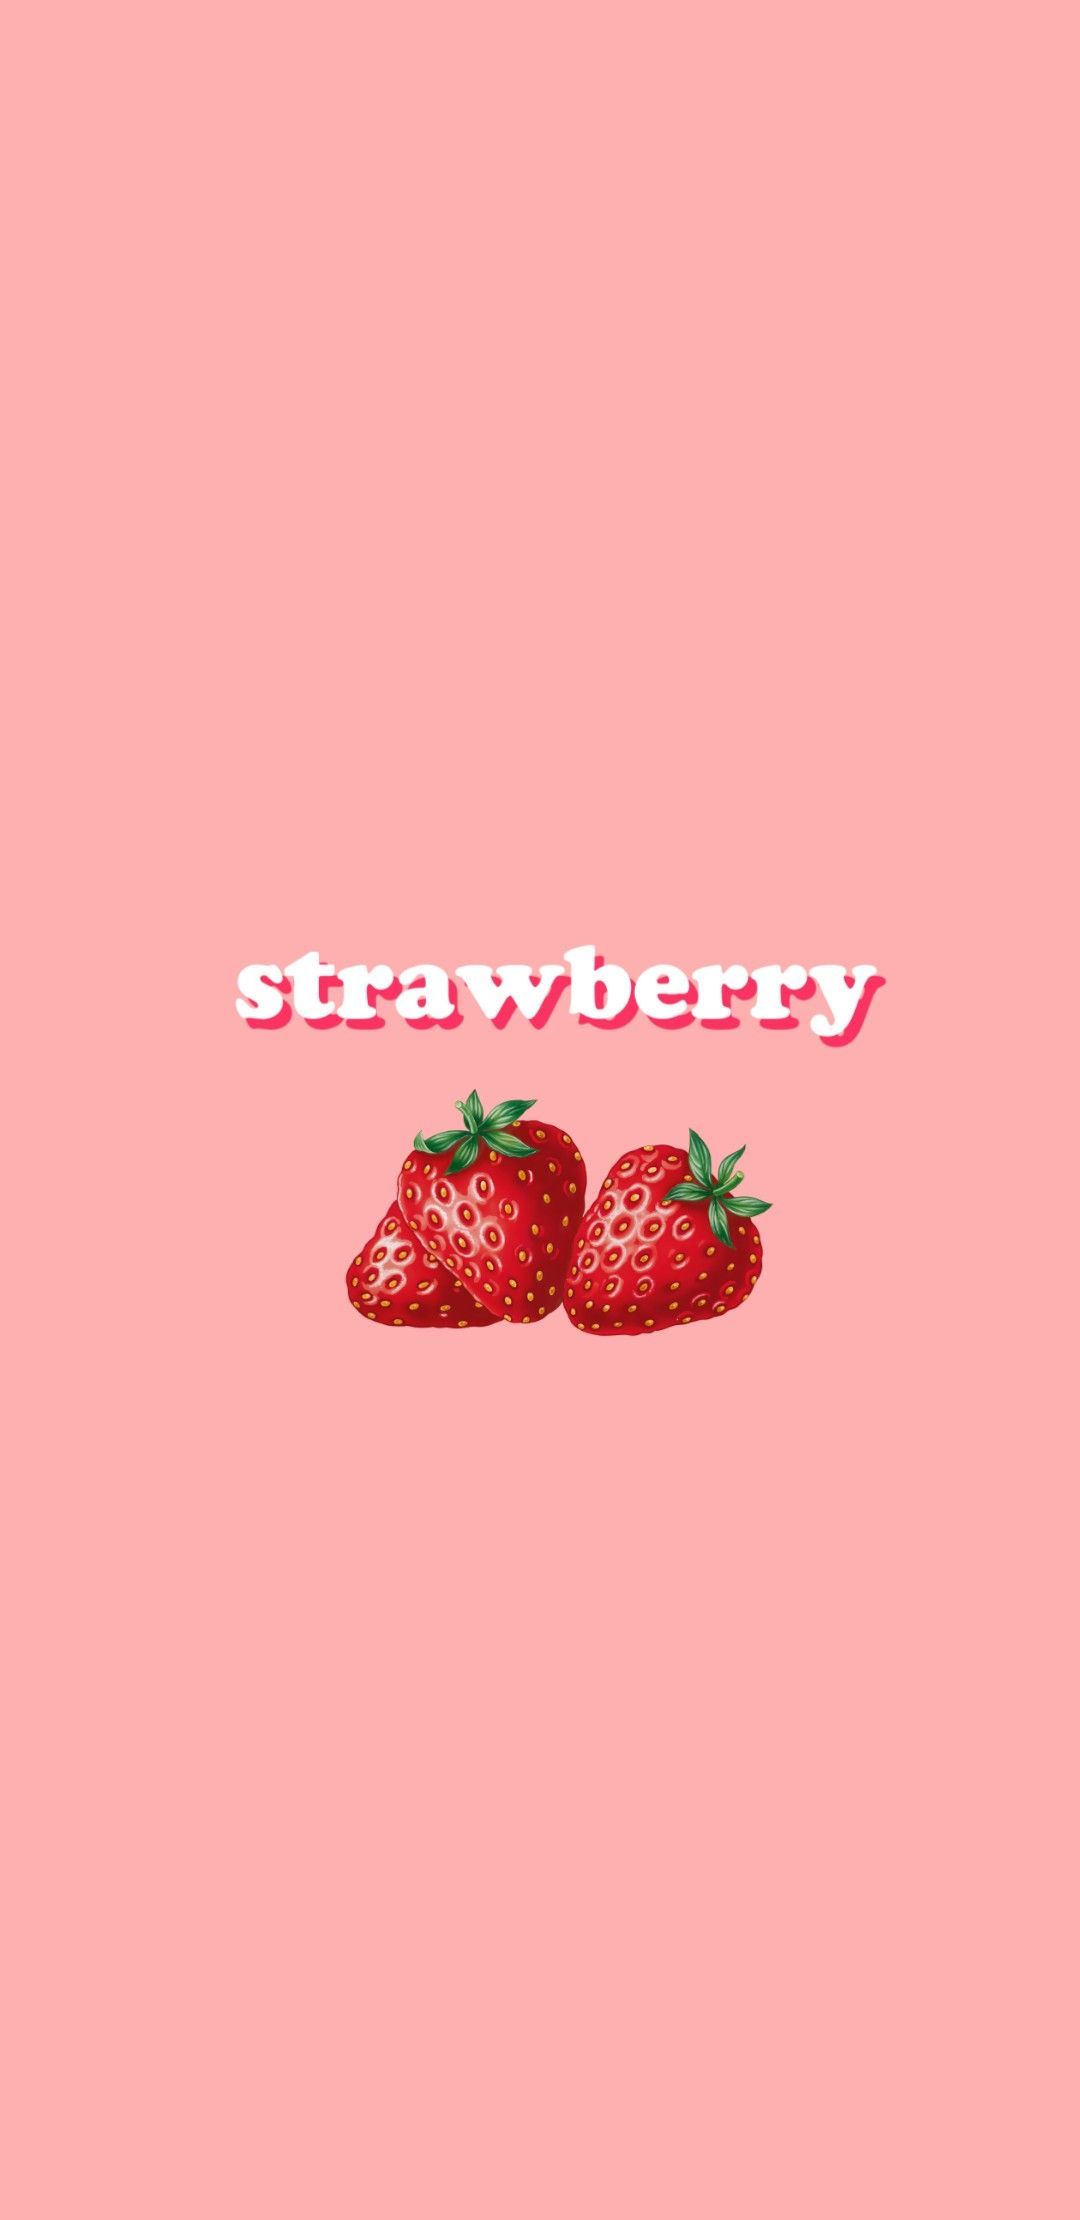 Strawberry wallpeper. Strawberry background, Strawberry, Strawberry drawing